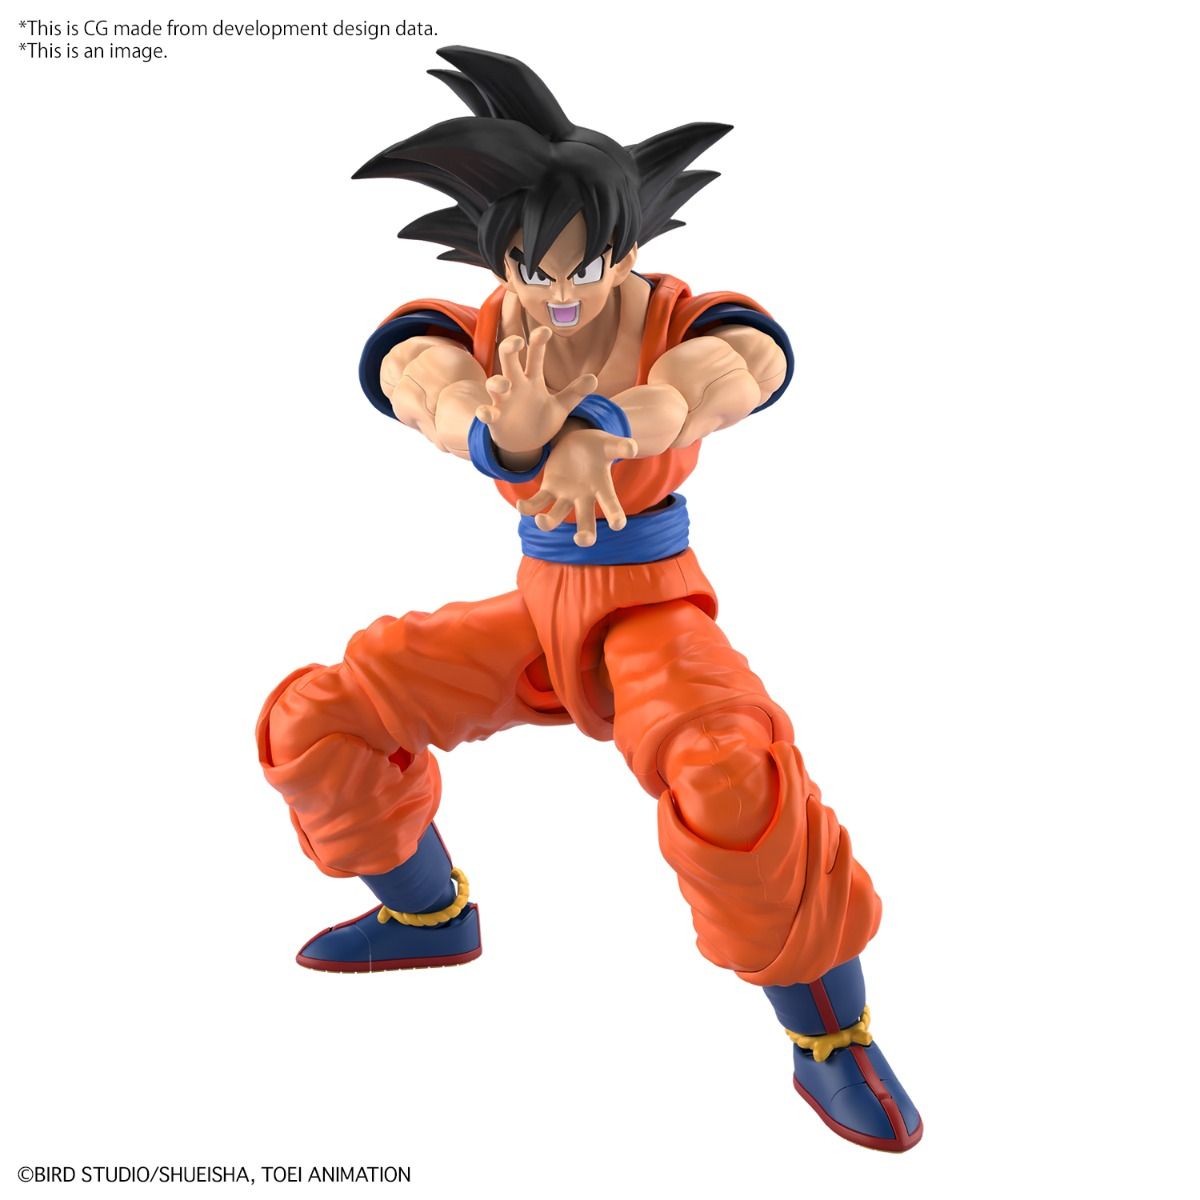 Bandai Hobby Standard Super Saiyan 4 Son Goku Dragon Ball GT